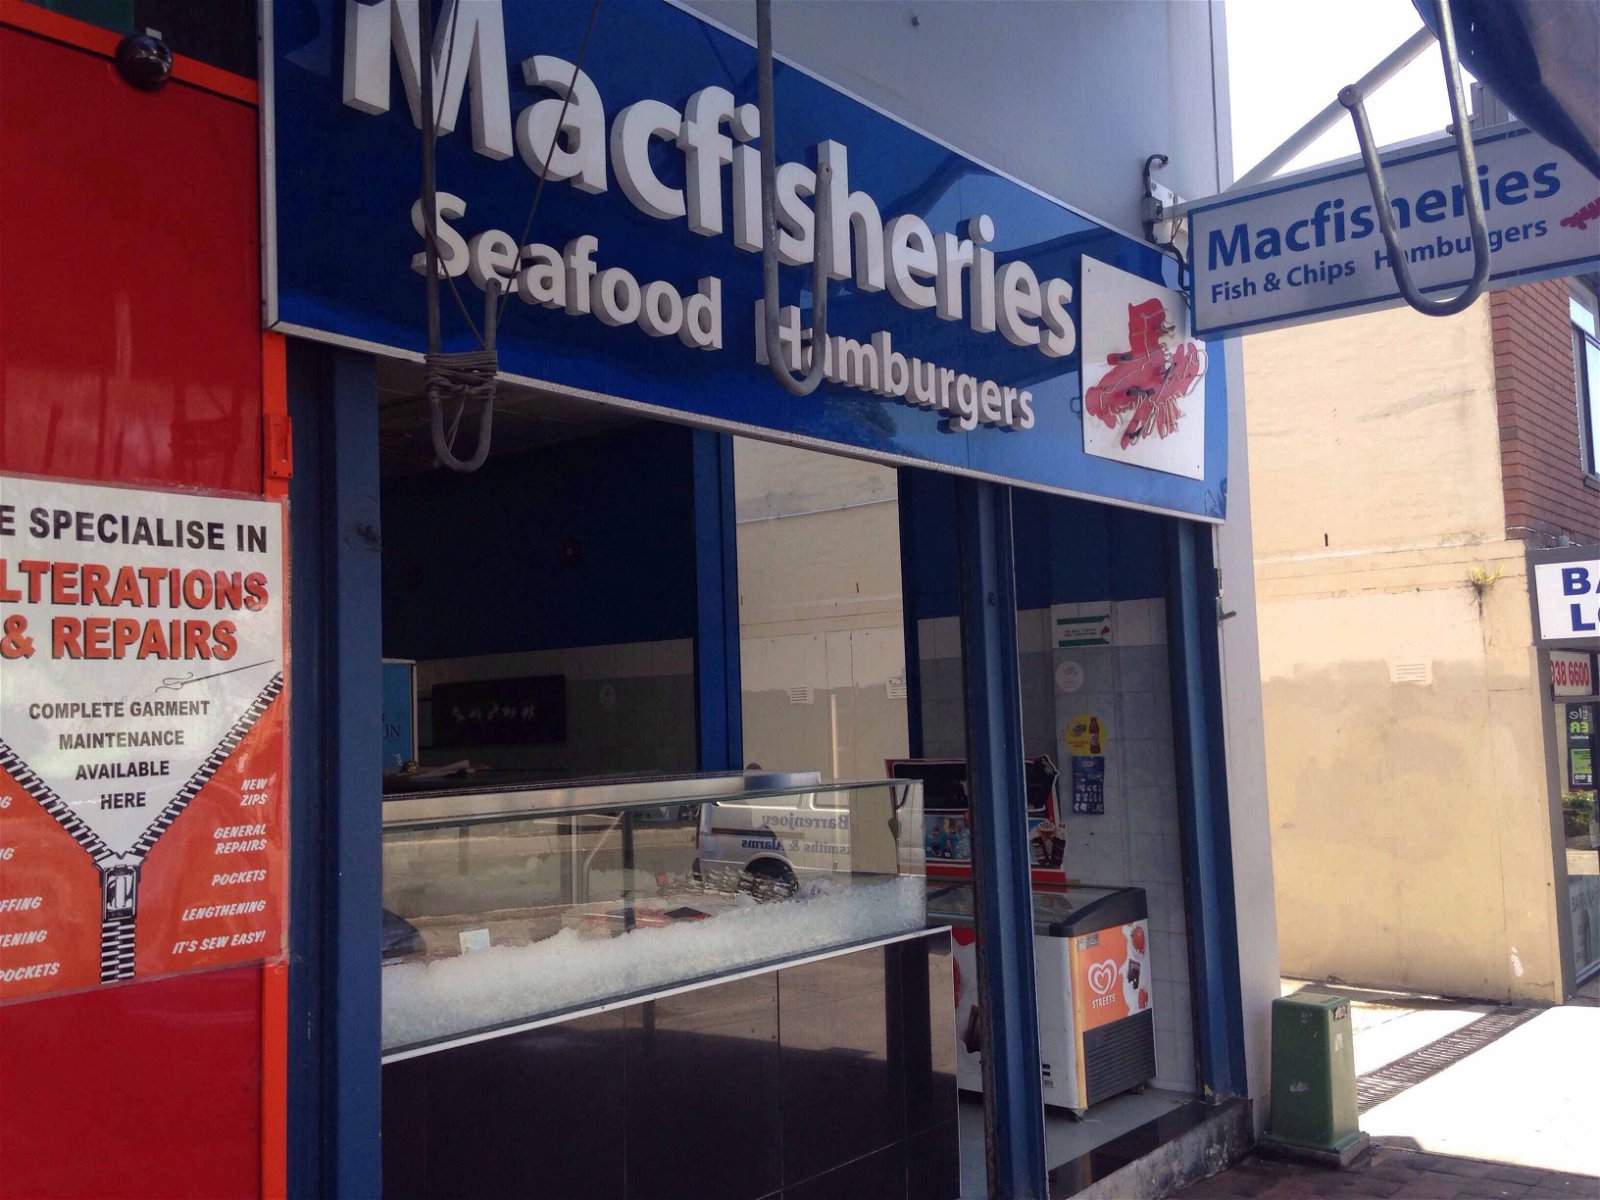 Macfisheries - Accommodation Find 0